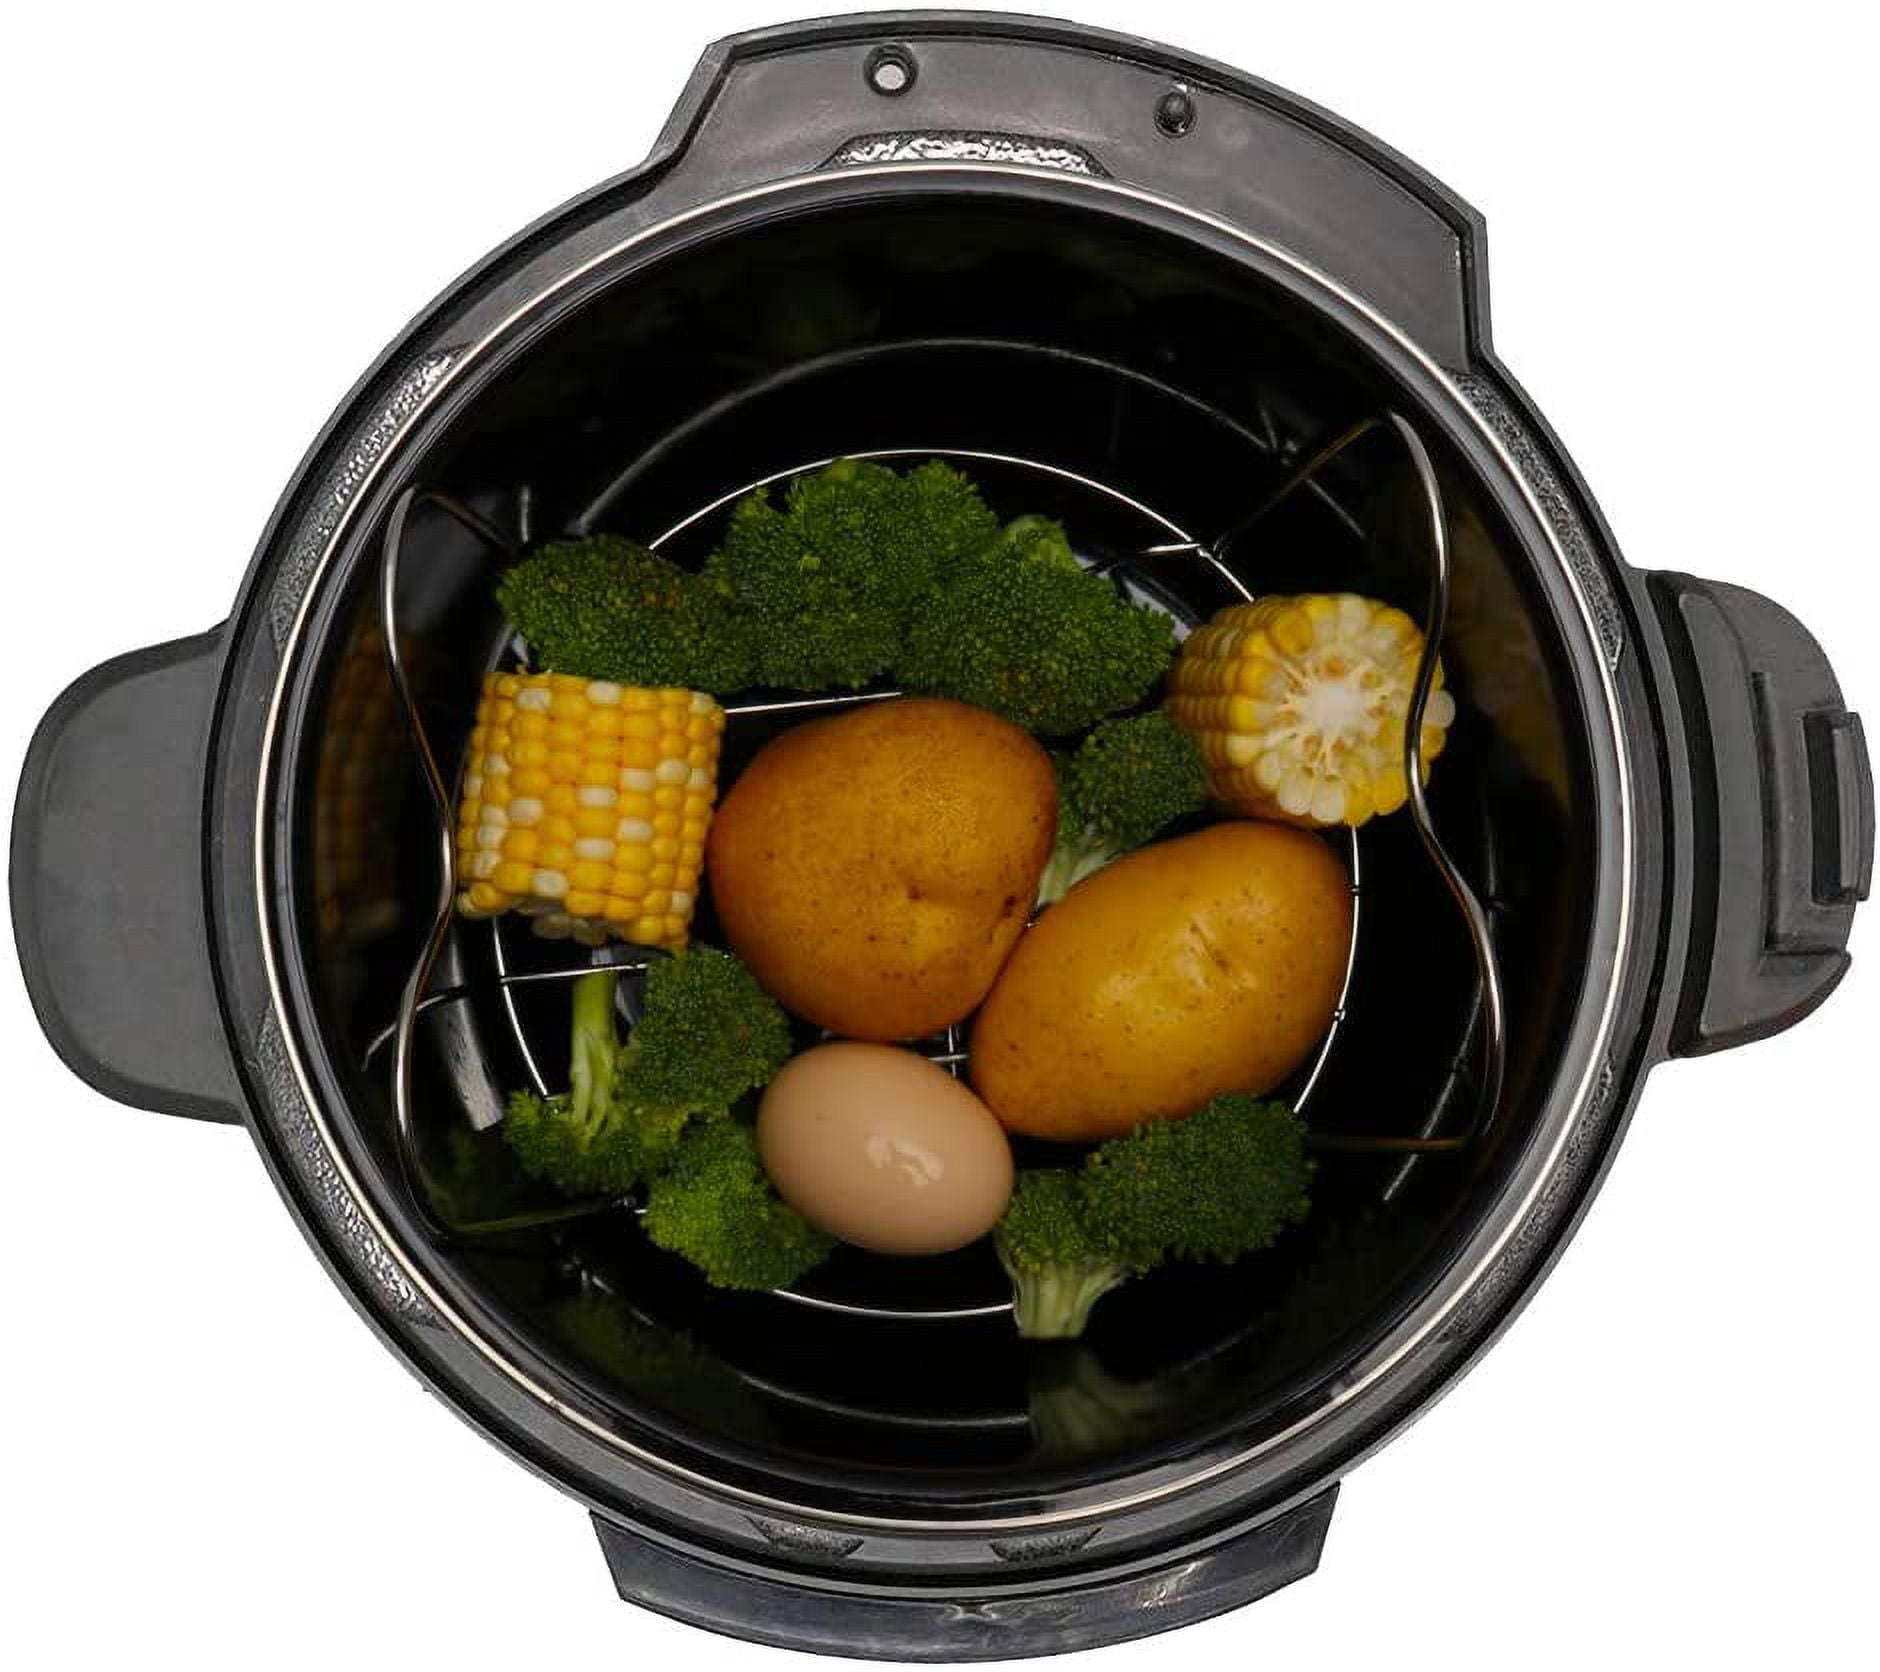  TOMOTE Egg Steamer Rack Trivet for Instant Pot Accessories 5 Qt,  6 Qt, 8 Qt Pressure Cooker - 2 Pack Stackable 304 Stainless steel  Multipurpose Cooling Rack (2 Pack): Home & Kitchen